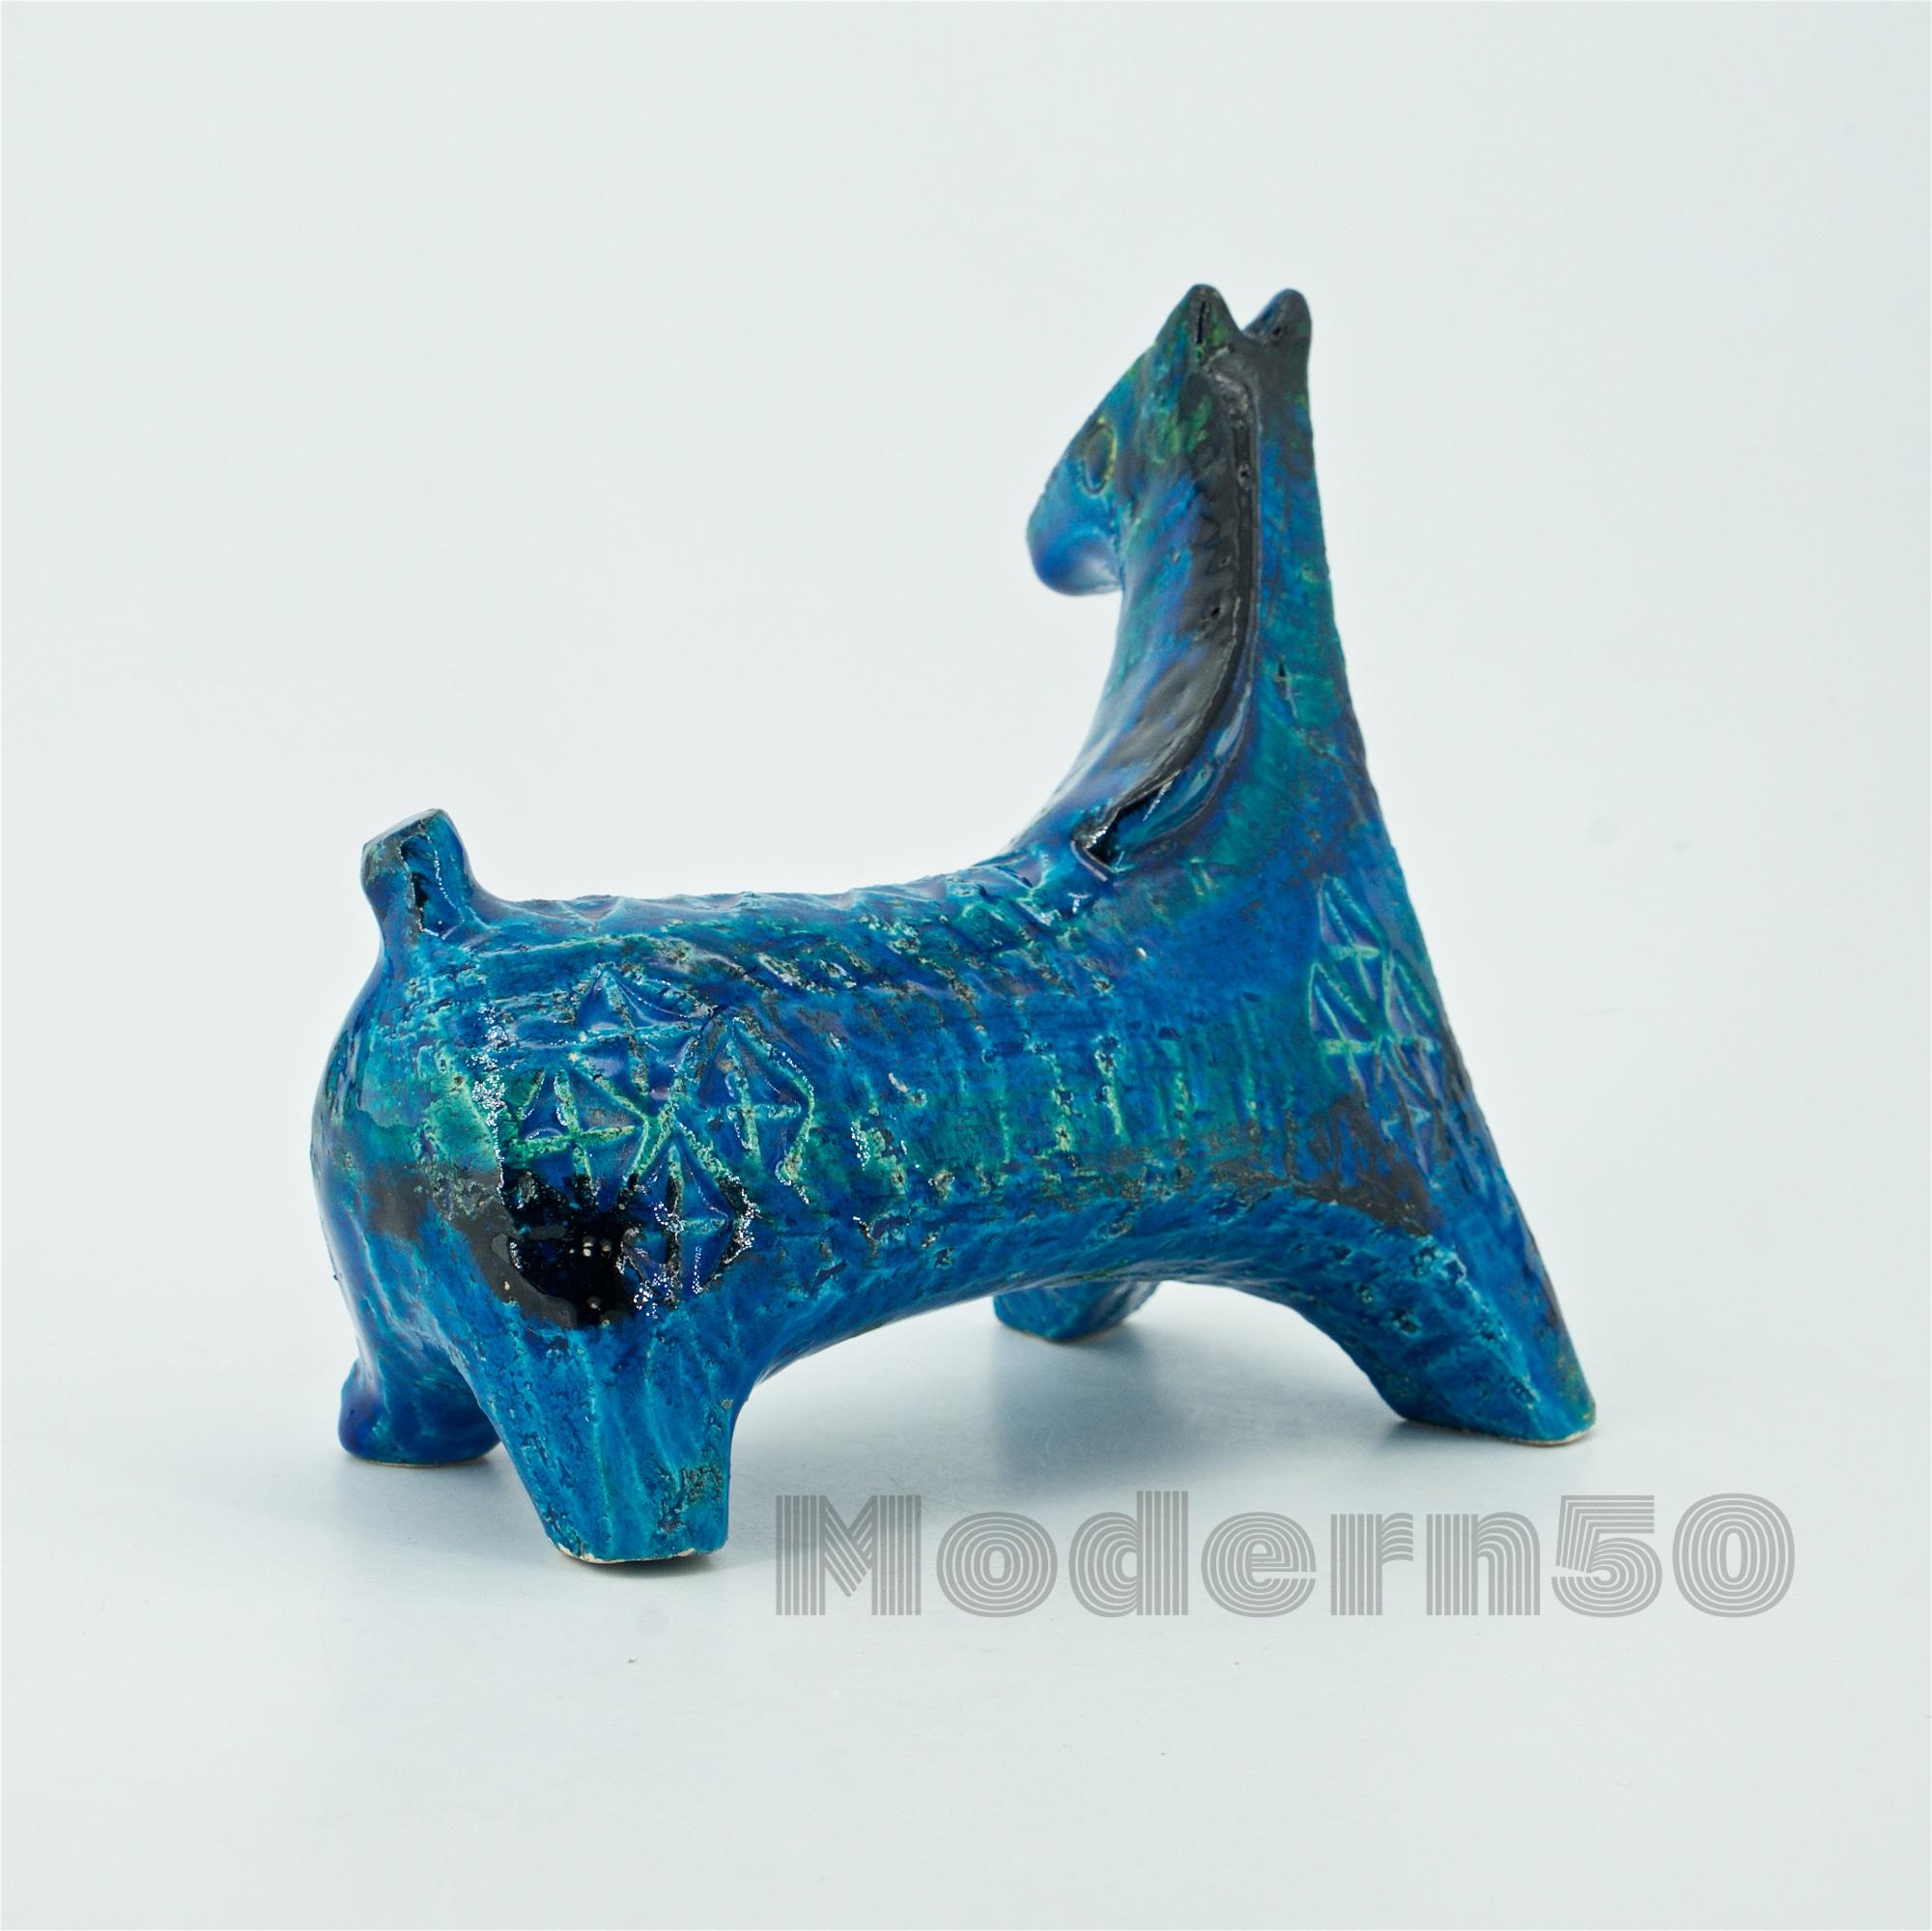 Mid-Century Modern 1960s Bitossi Rimini Blue Petite Horse Sculpture Midcentury Italian Aldo Londi